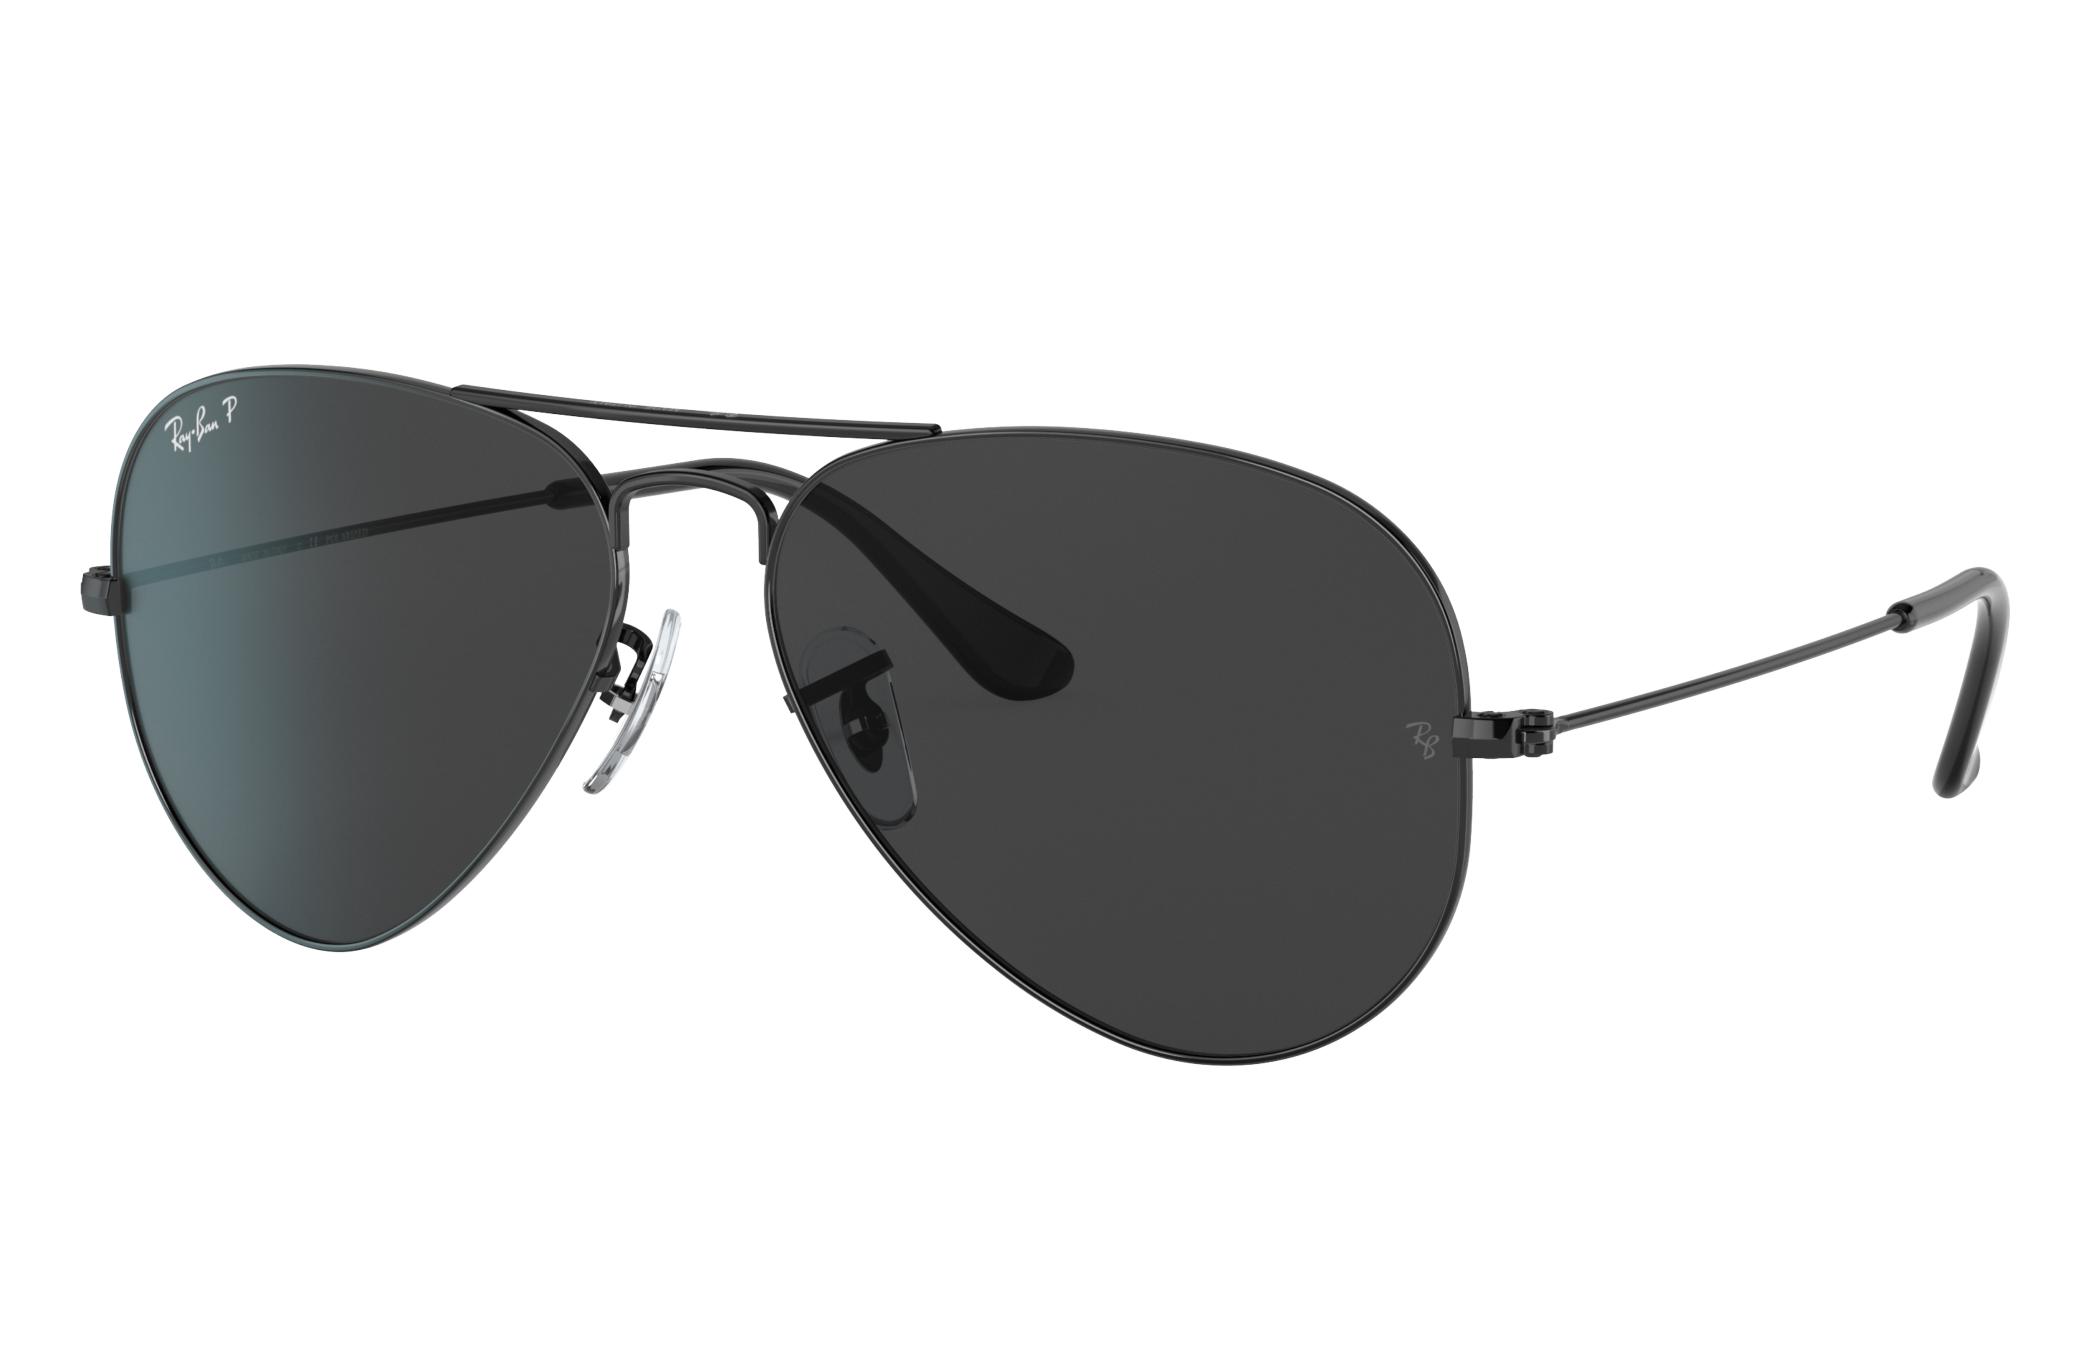 Accessoires Zonnebrillen & Eyewear Zonnebrillen Sunglasses Ray ban  Aviator 3026/3025 Black Frame Black Lens RB Rare 